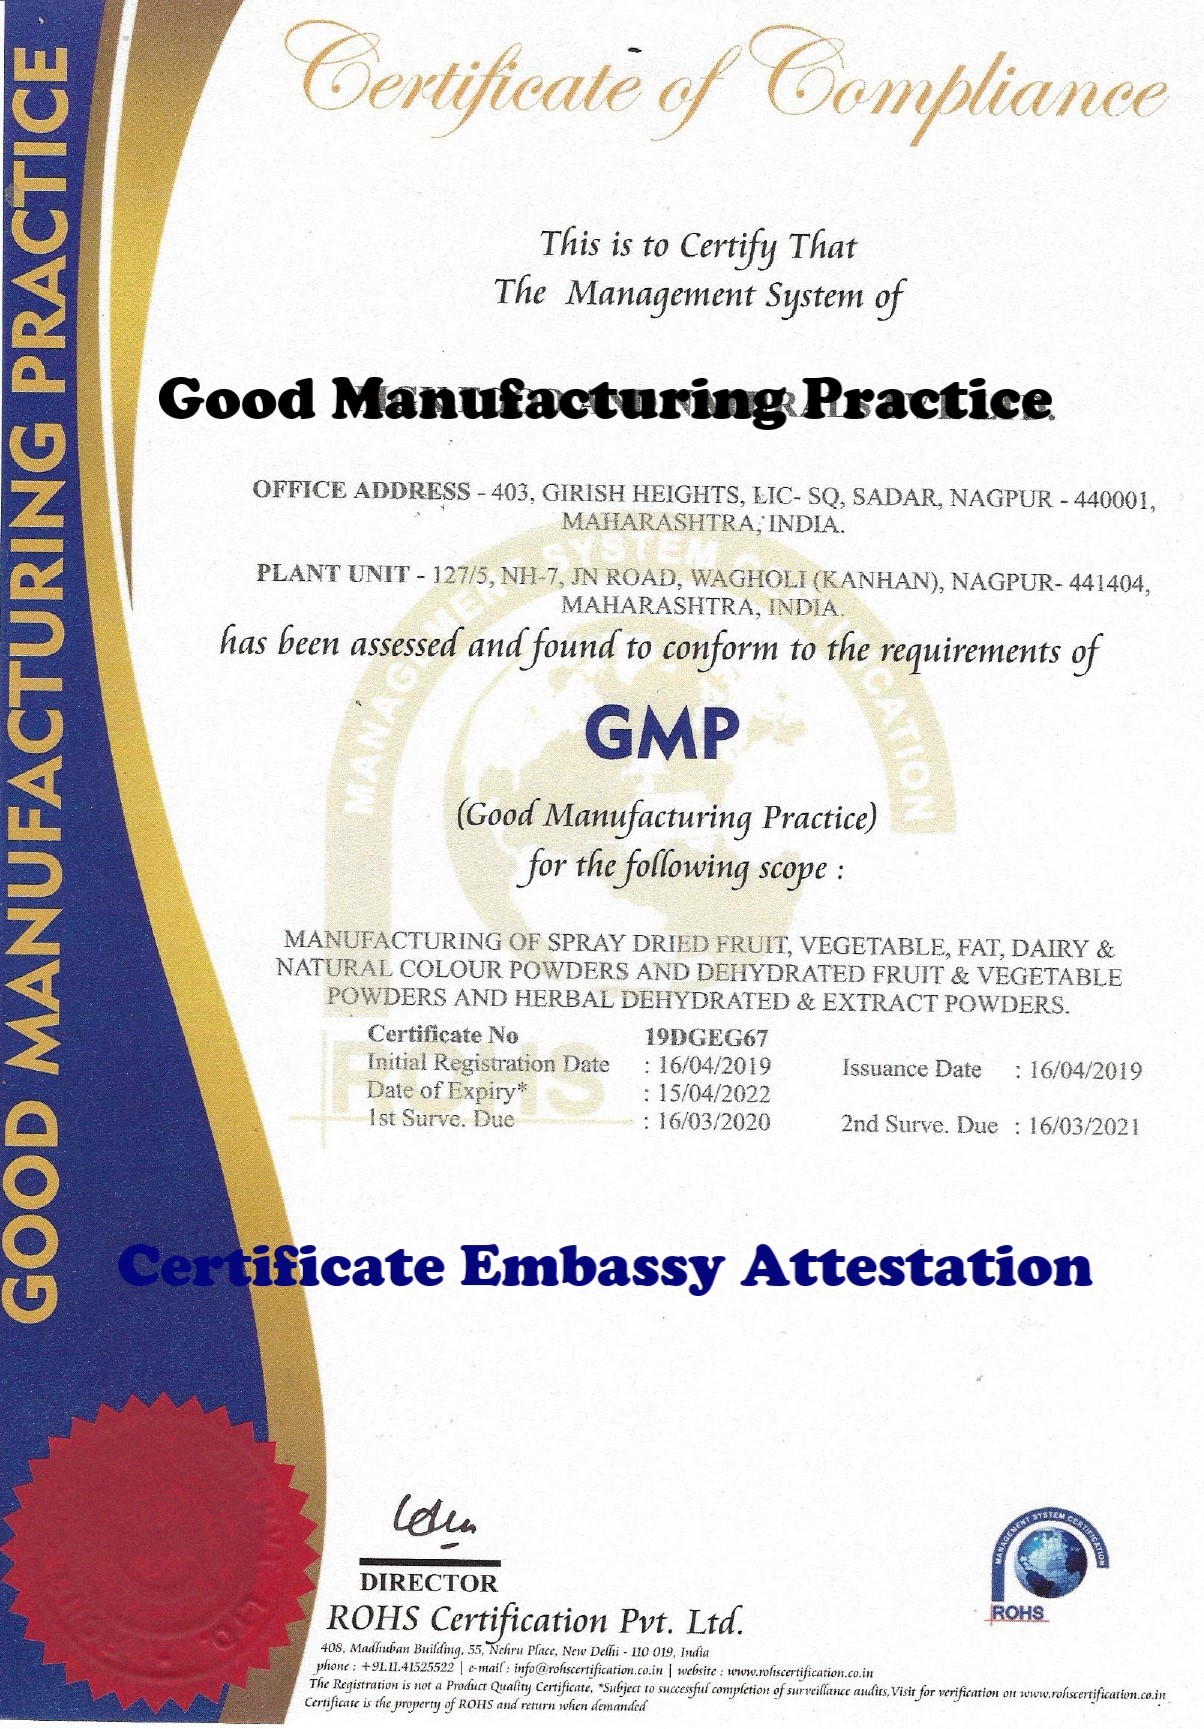 GMP Certificate Attestation from Yemen Embassy